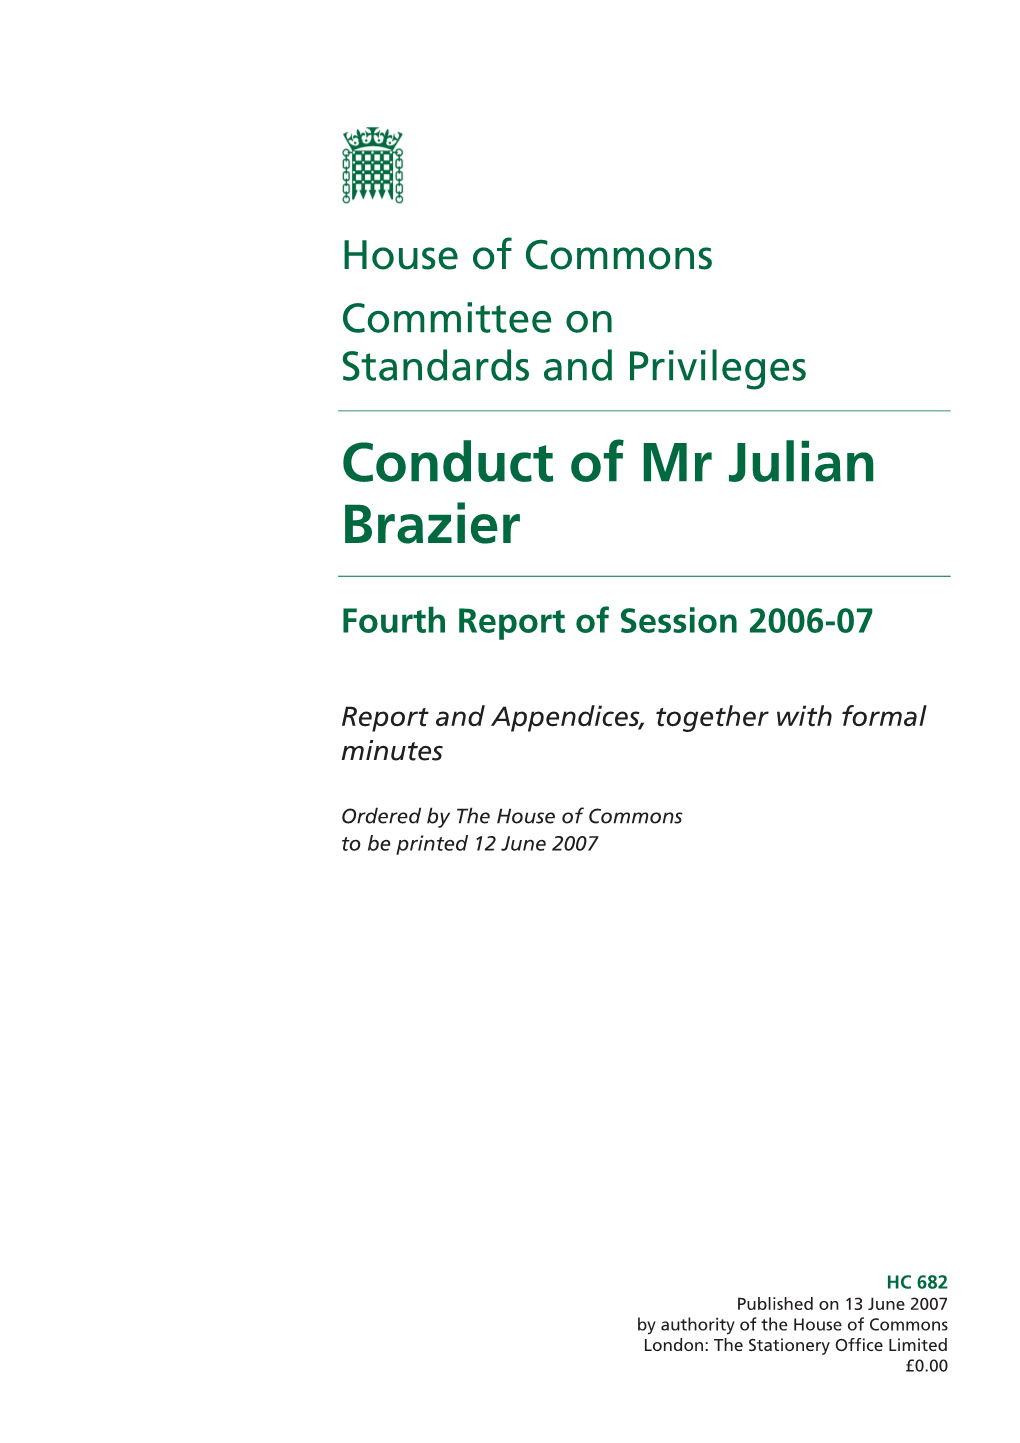 Conduct of Mr Julian Brazier